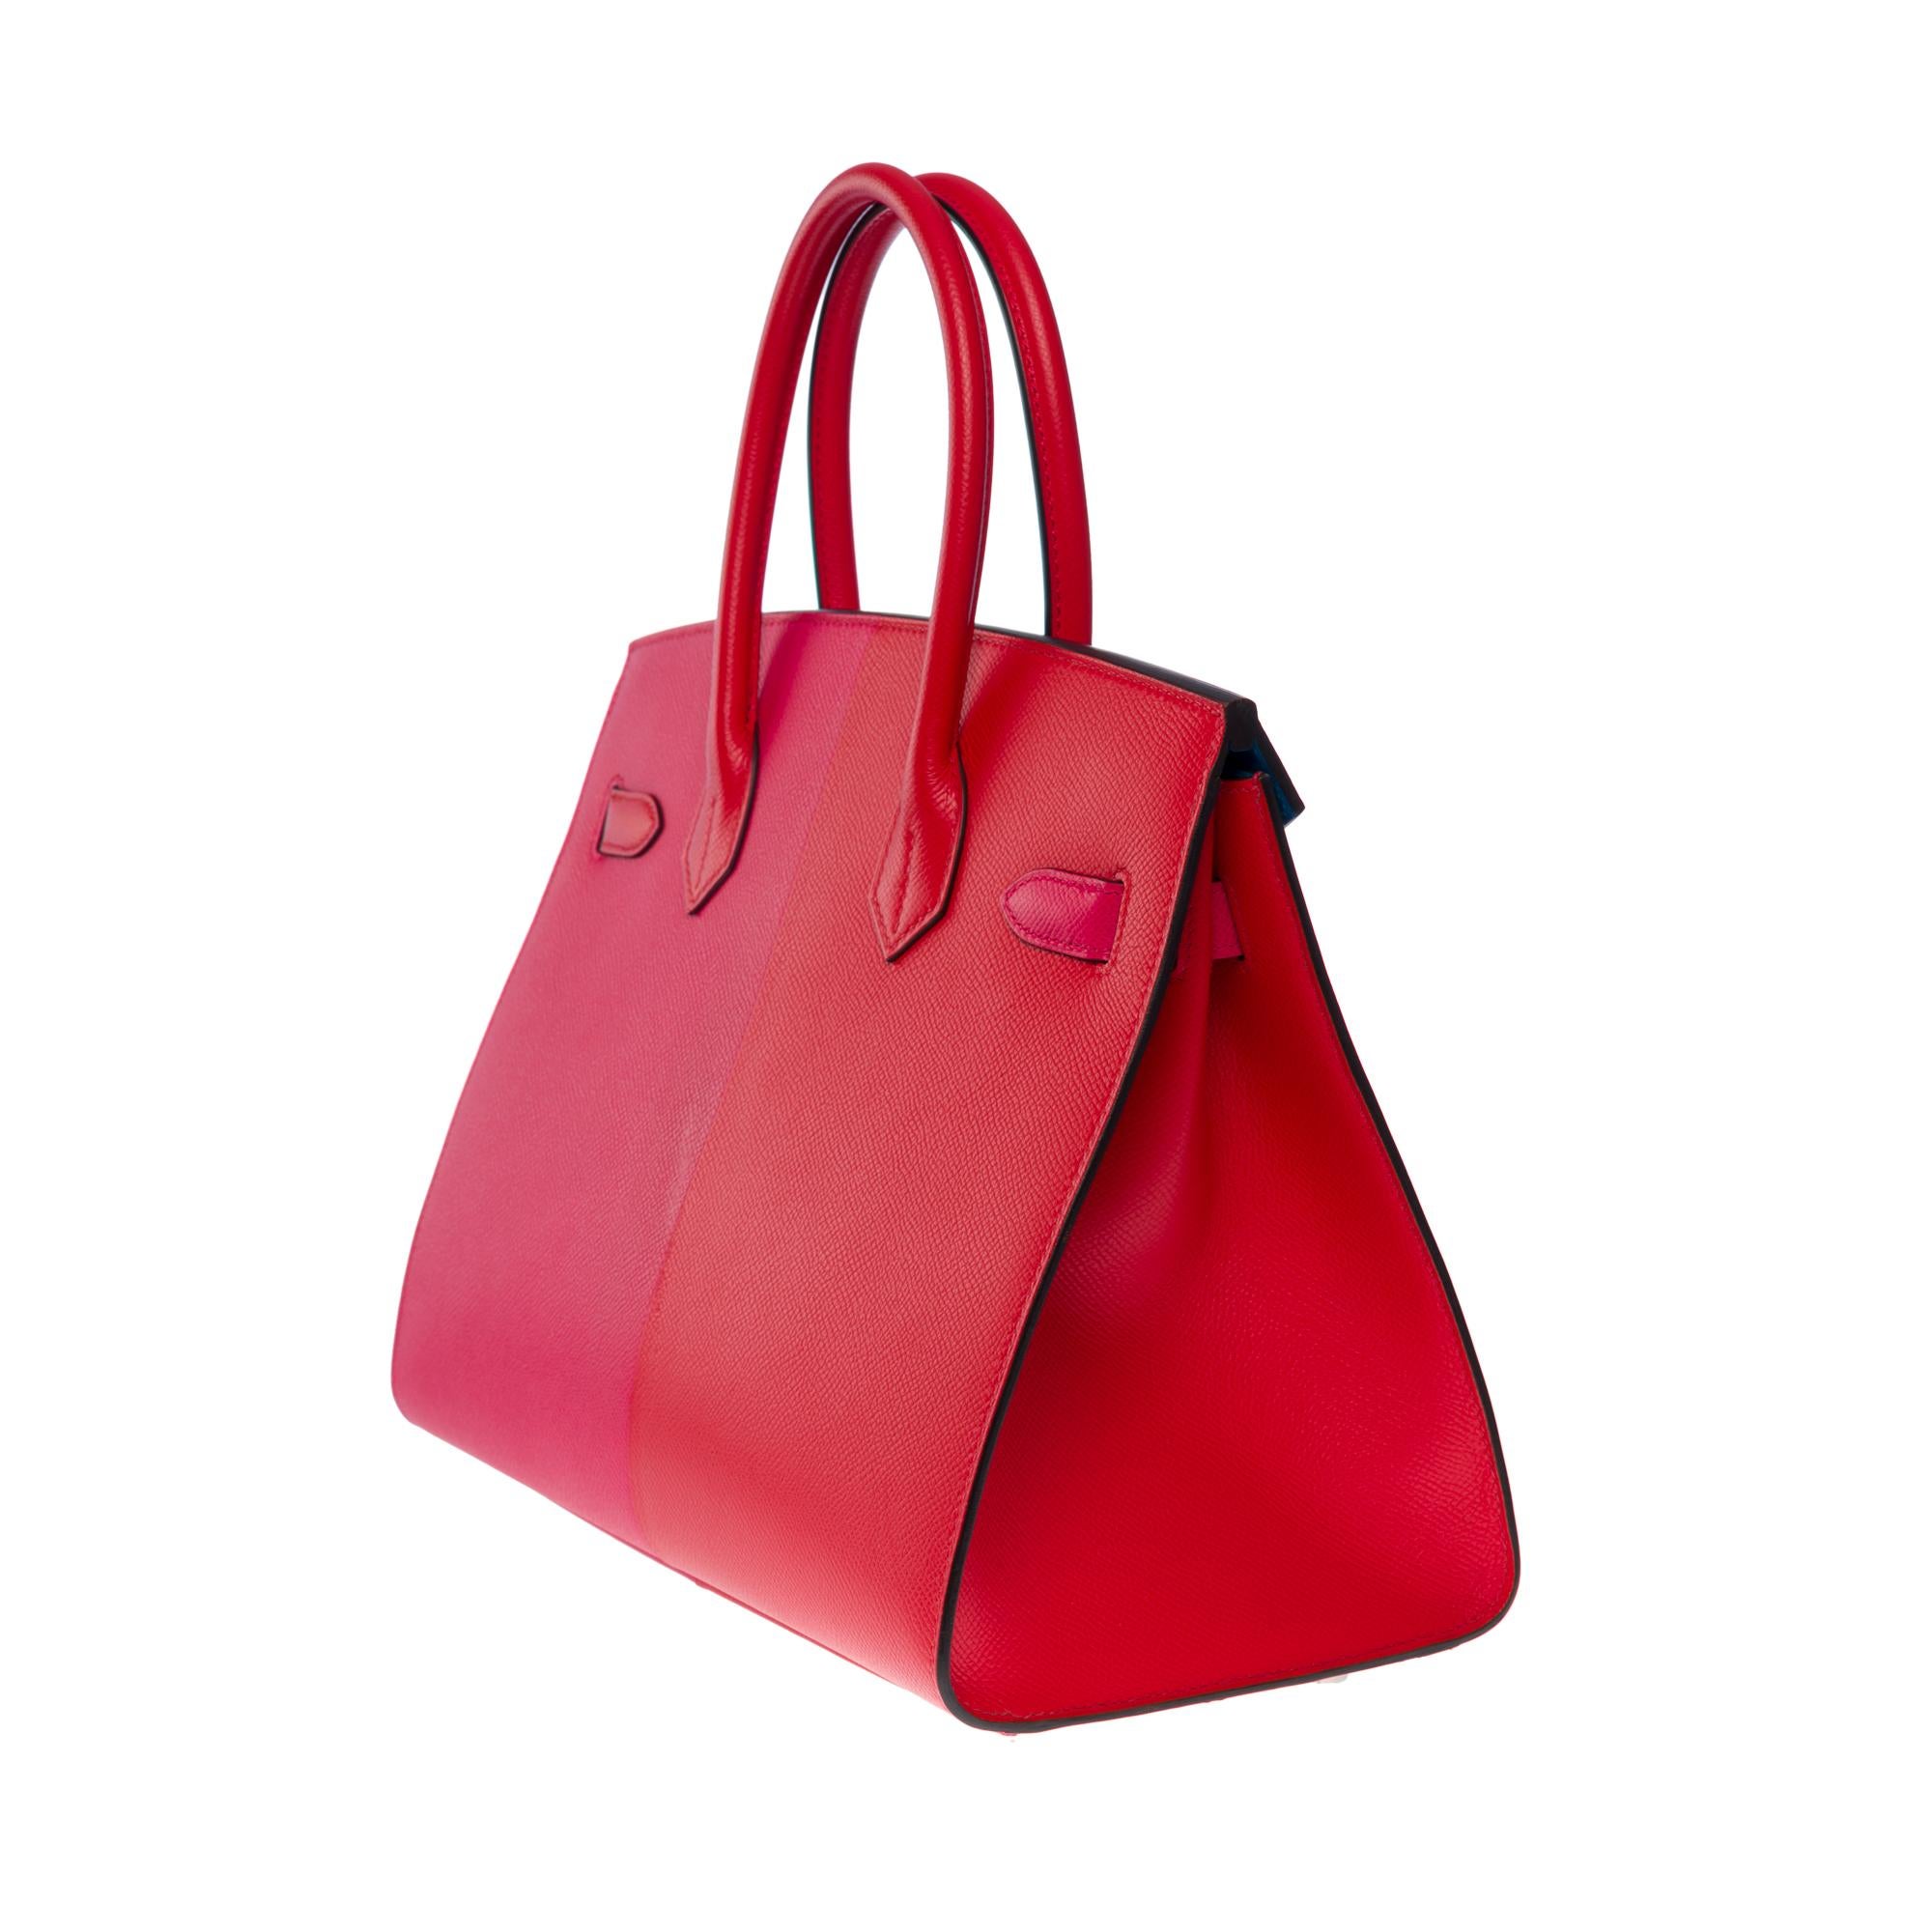 Women's New Hermès Kazak limited edition Birkin 30 handbag in Red/Pink Epsom leather, SHW